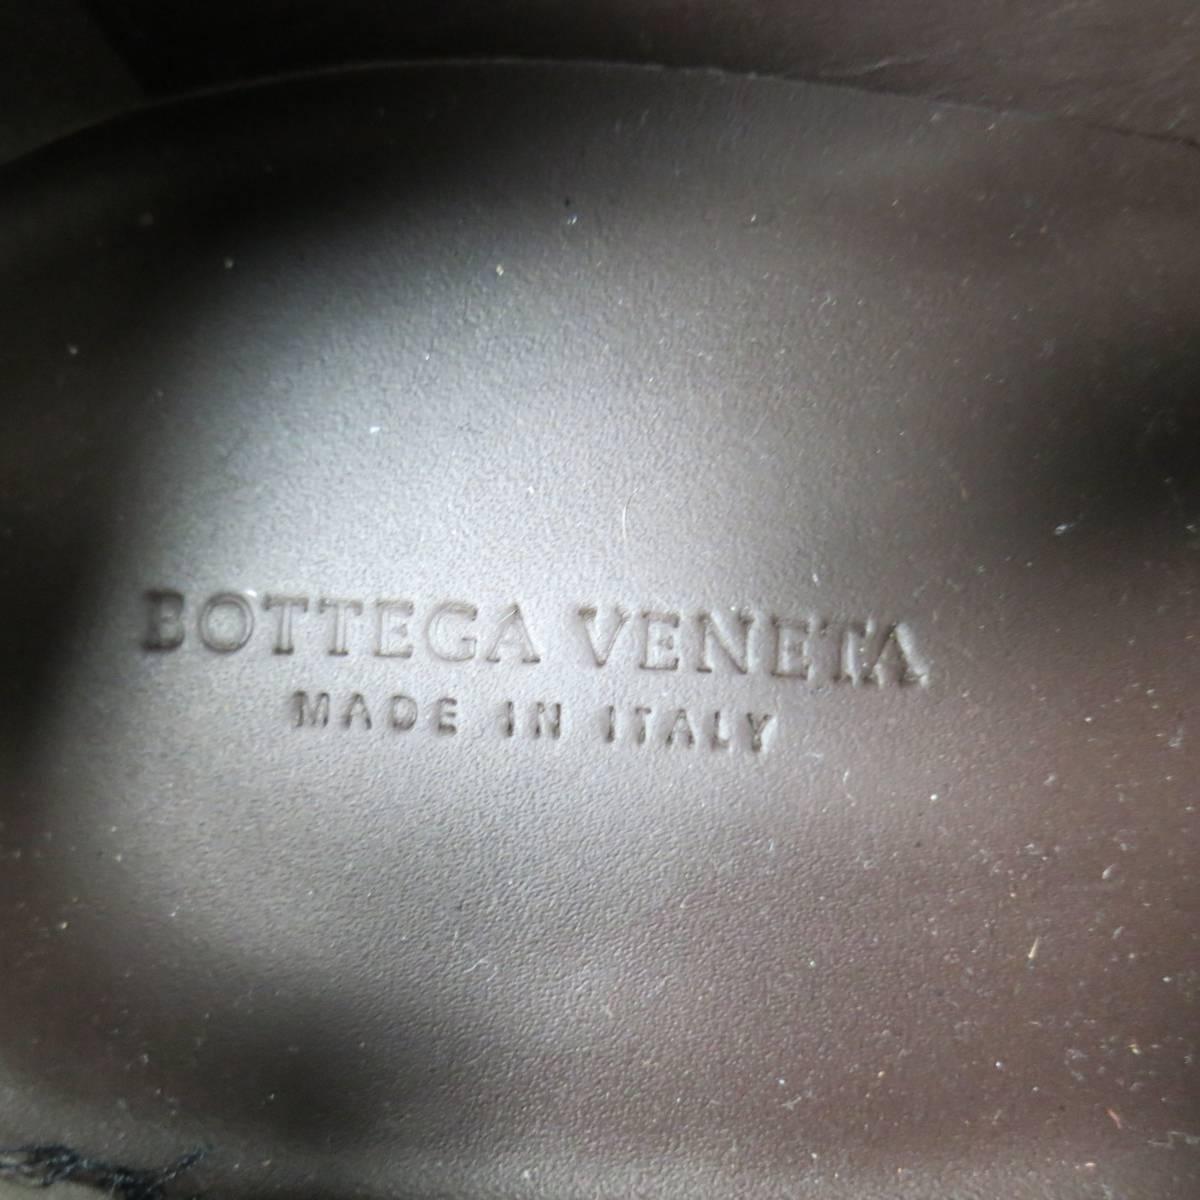 BOTTEGA VENETA Men's Size 11 Men's Black Leather Intrecciato Woven Penny Loafers 2